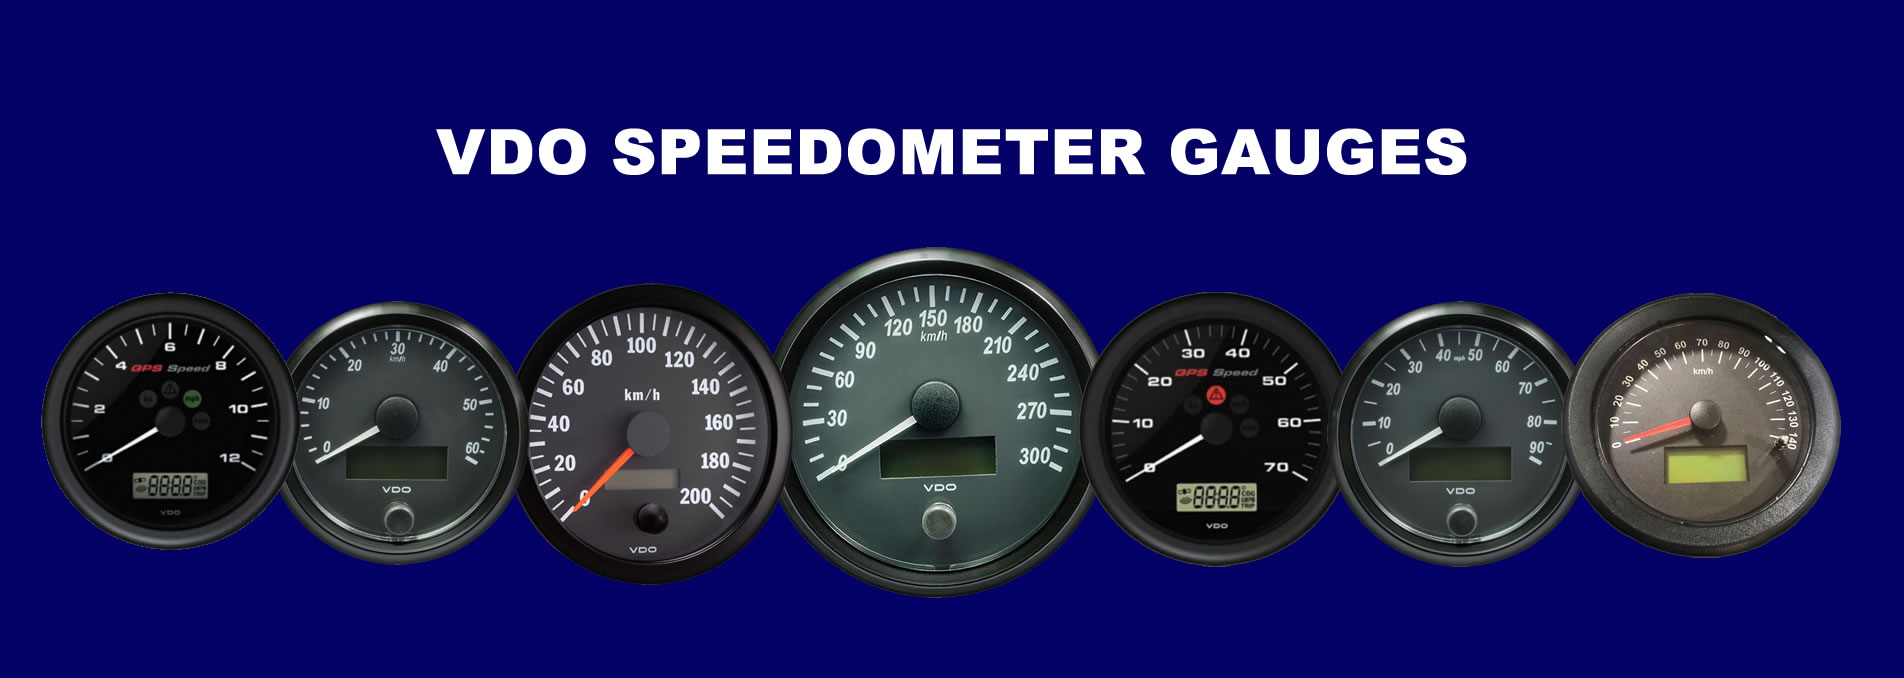 vdo speedometer gauges banner